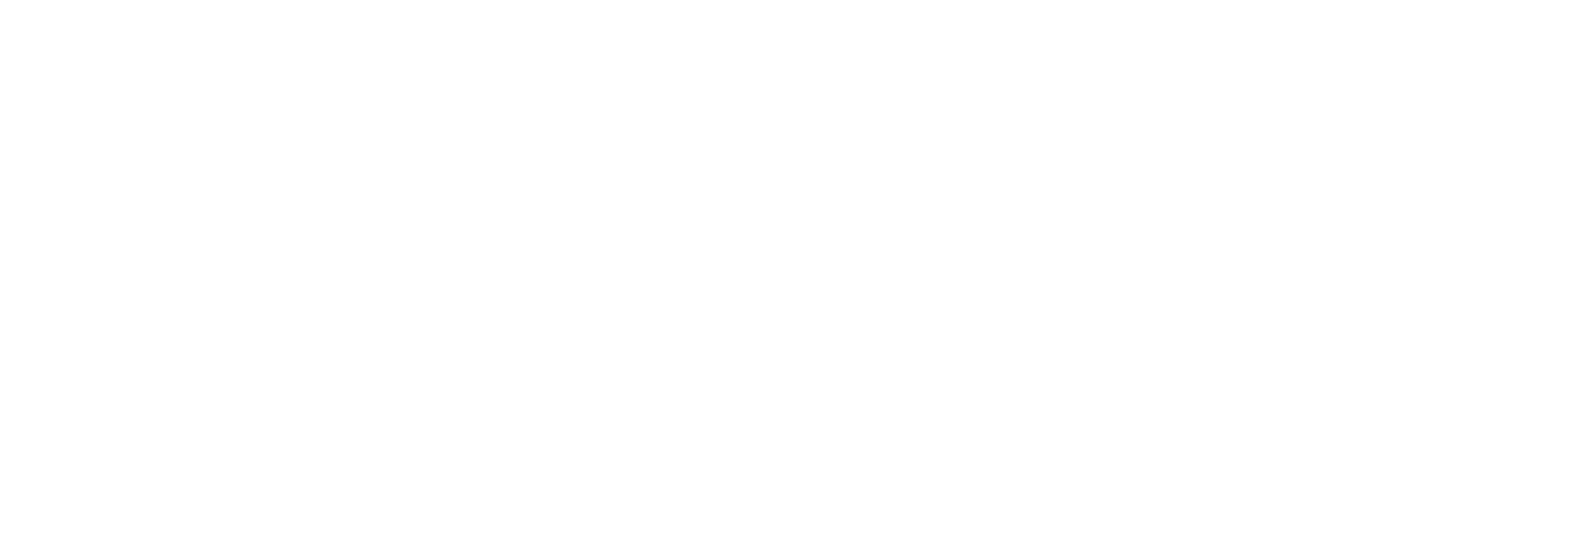 British American Tobacco logo large for dark backgrounds (transparent PNG)